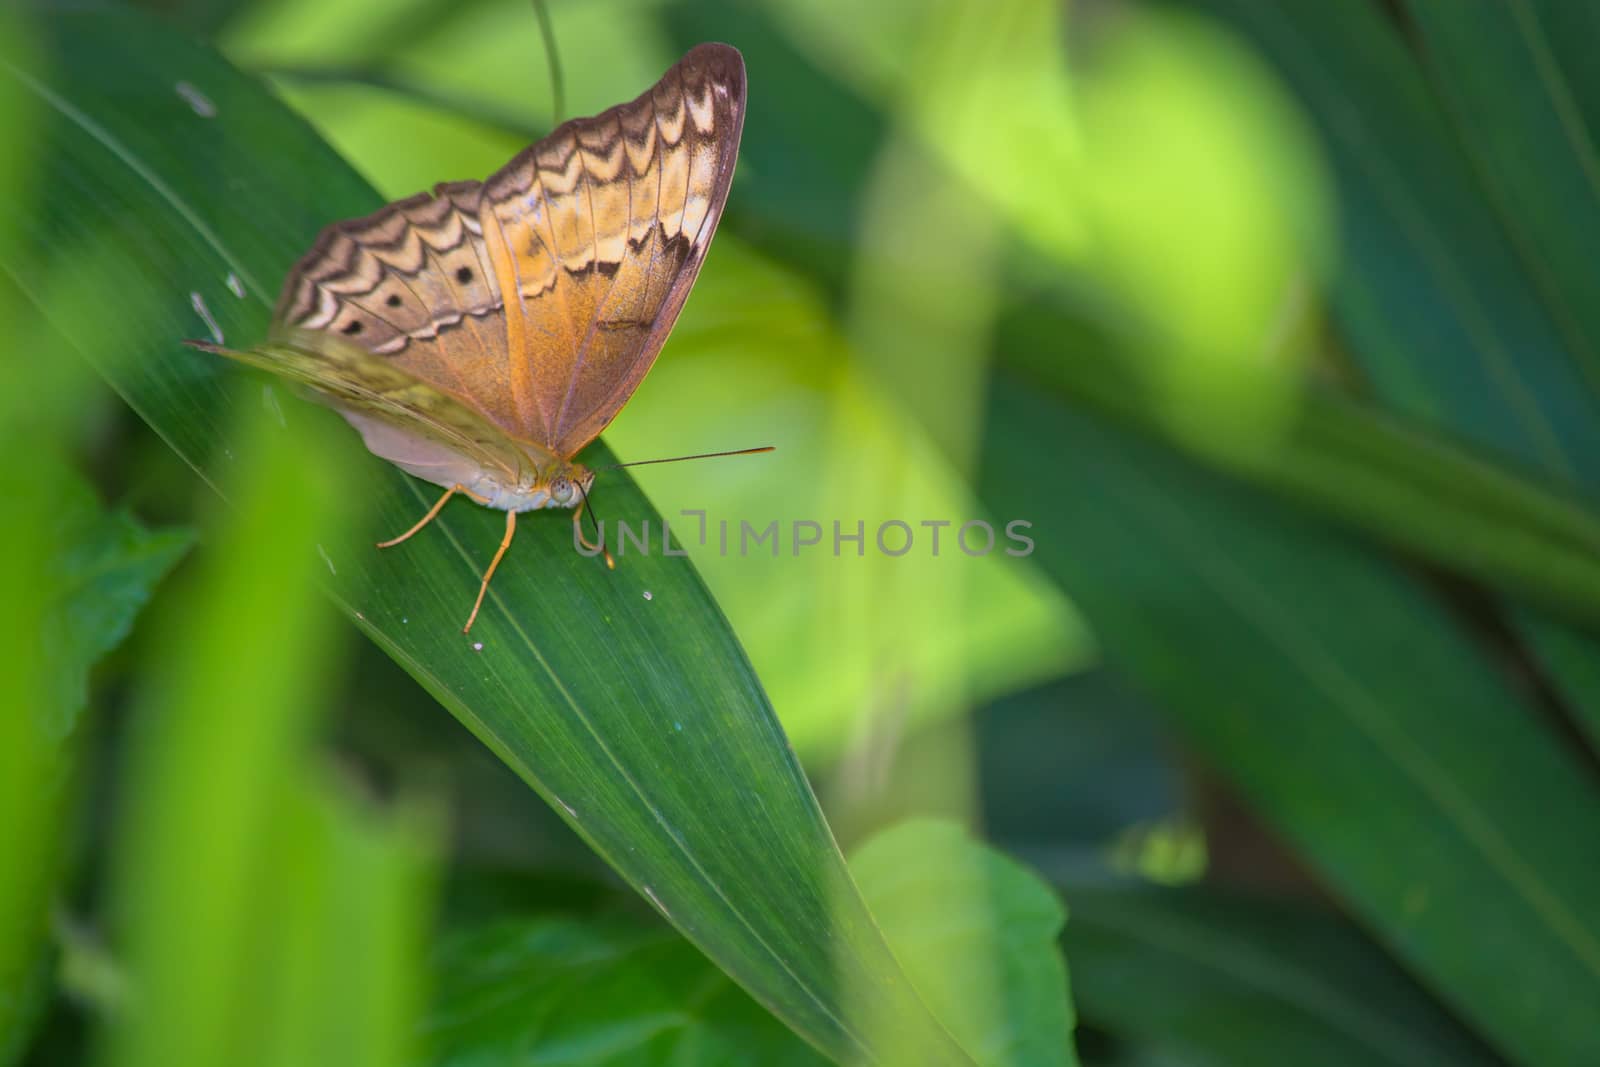 Little Yeoman butterfly, Cirrochroa surya on green leave.